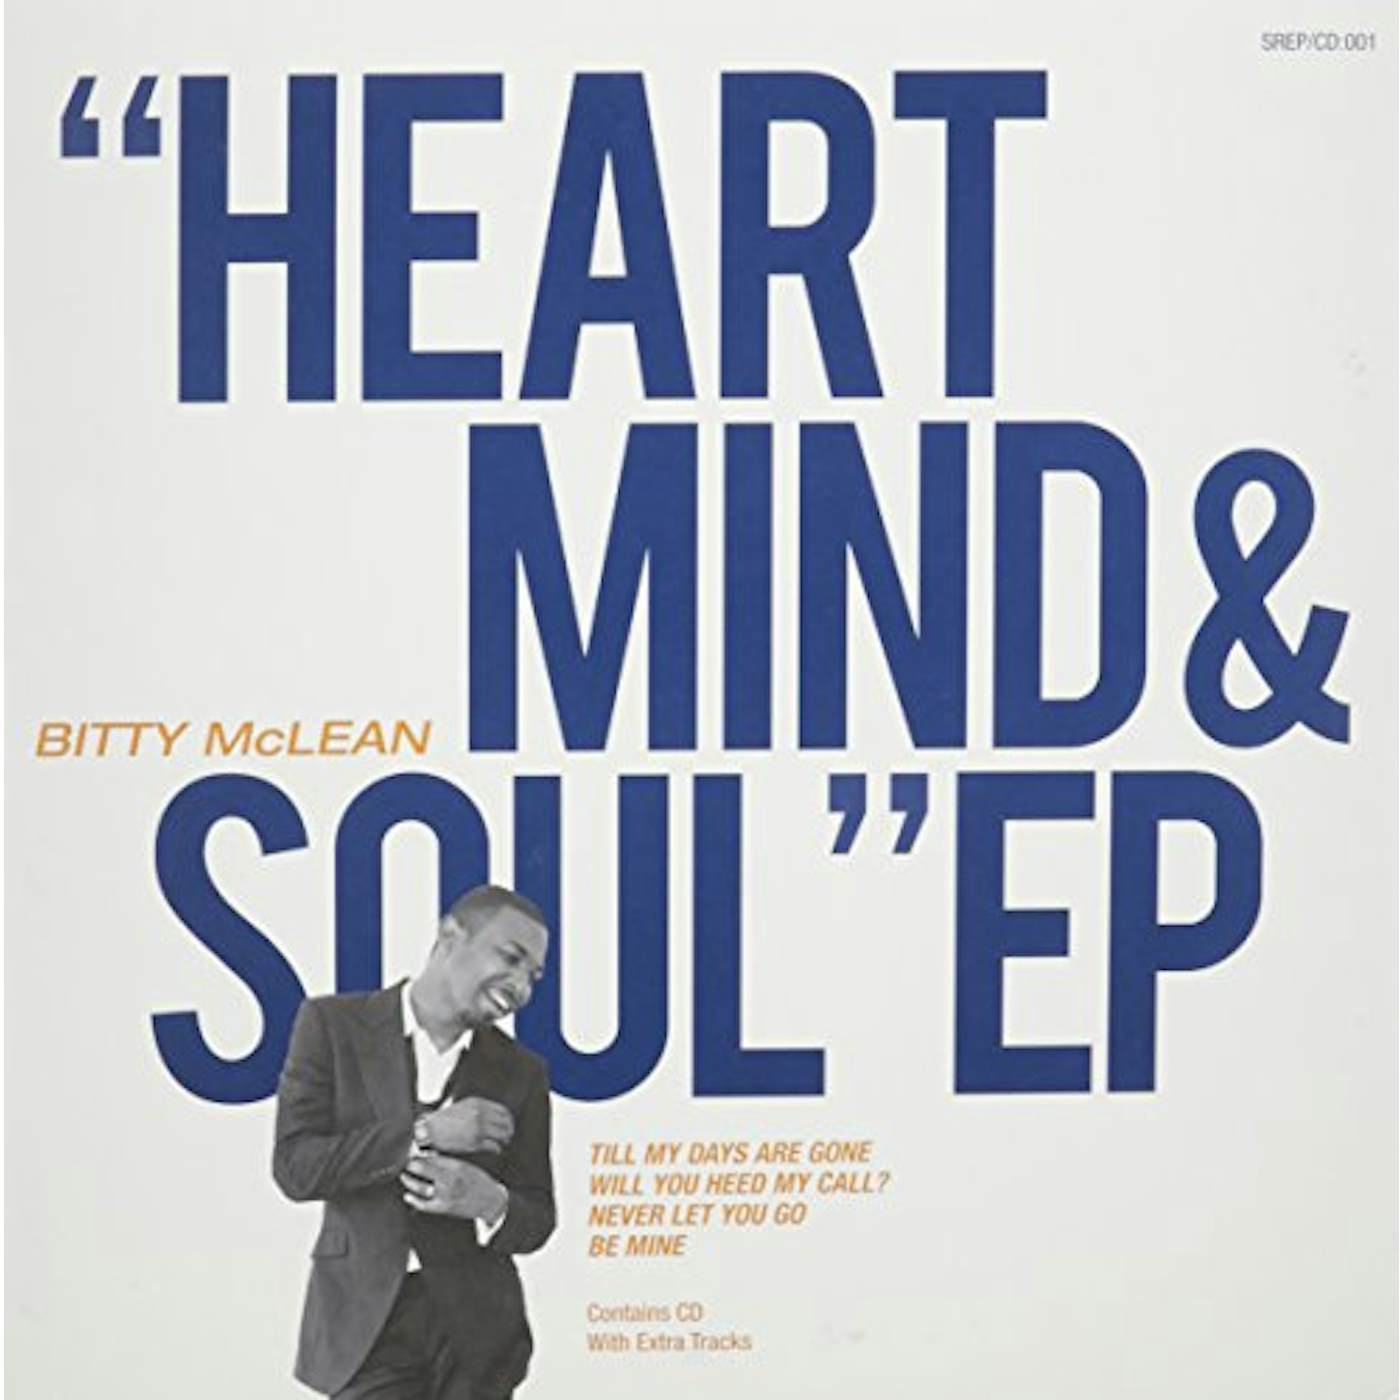 Bitty McLean HEART MIND & SOUL Vinyl Record